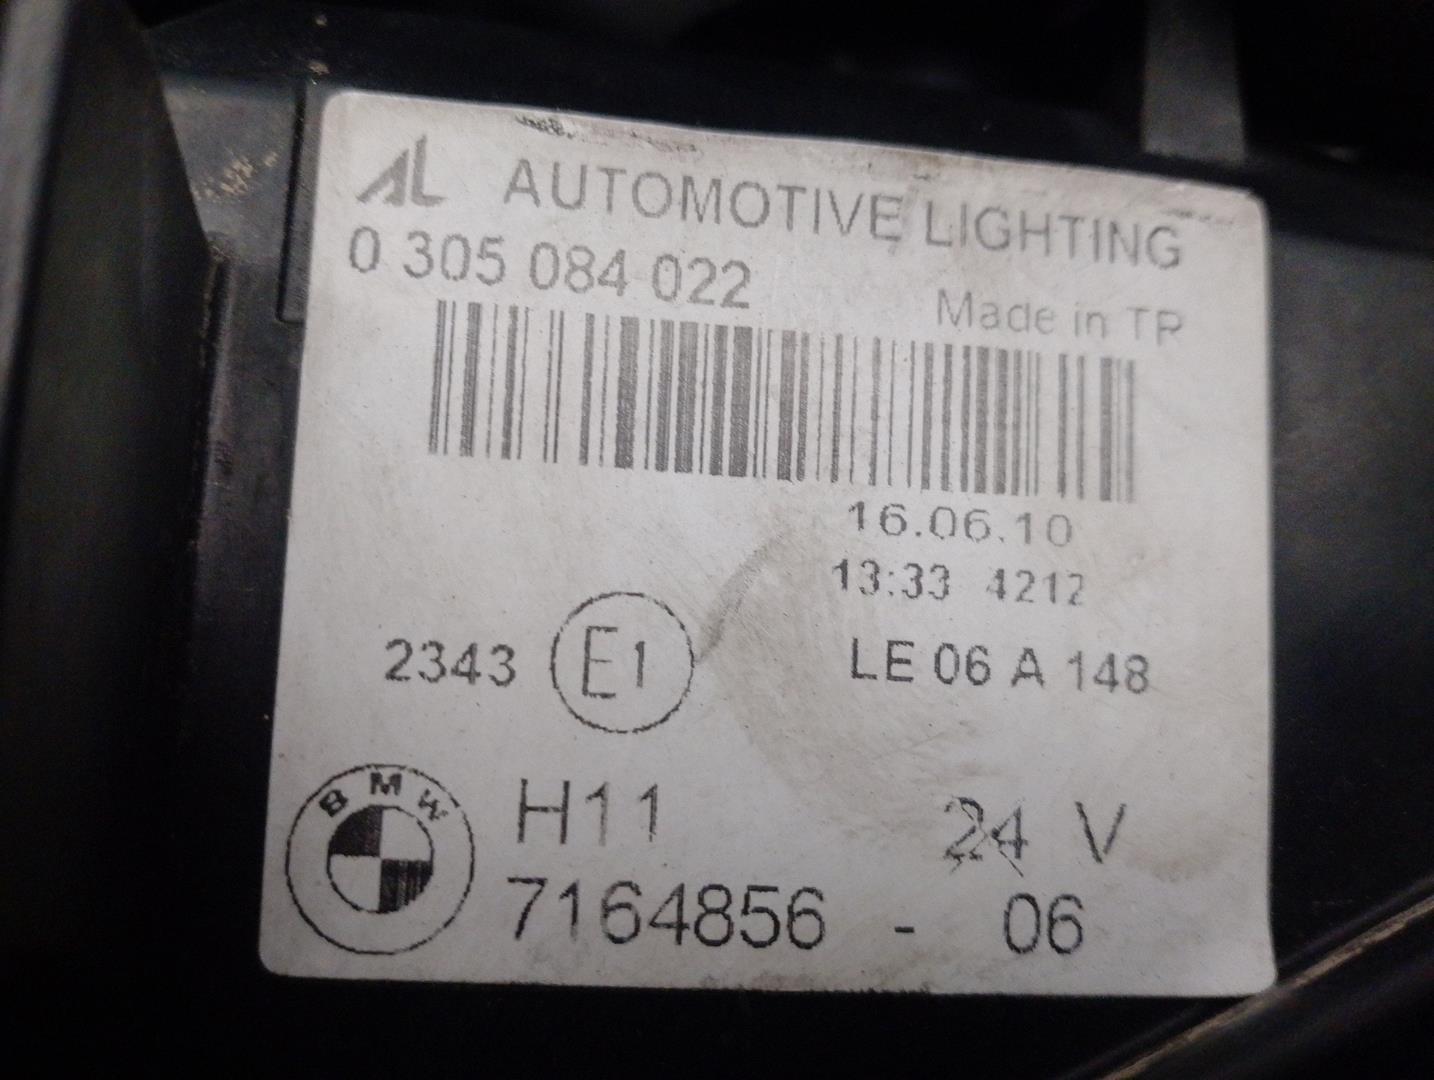 BMW 1 Series E81/E82/E87/E88 (2004-2013) Противотуманка бампера передняя правая 7164856, 0305084022, AUTOMOTIVE 24224177